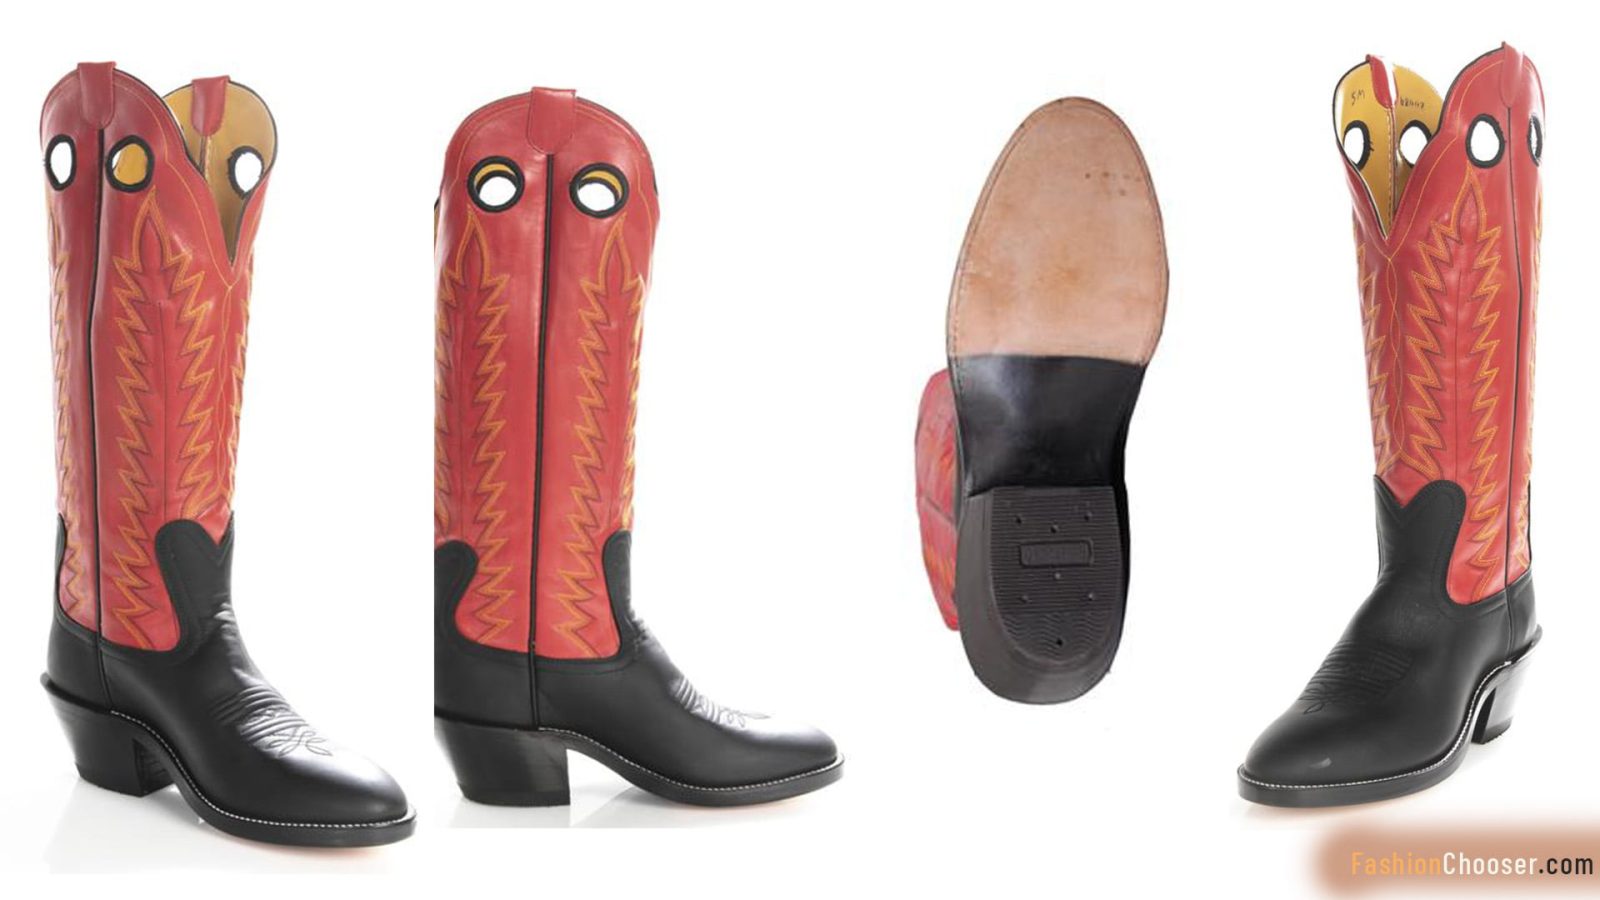 Dews handmade boots - comfortable cowboy boot brand